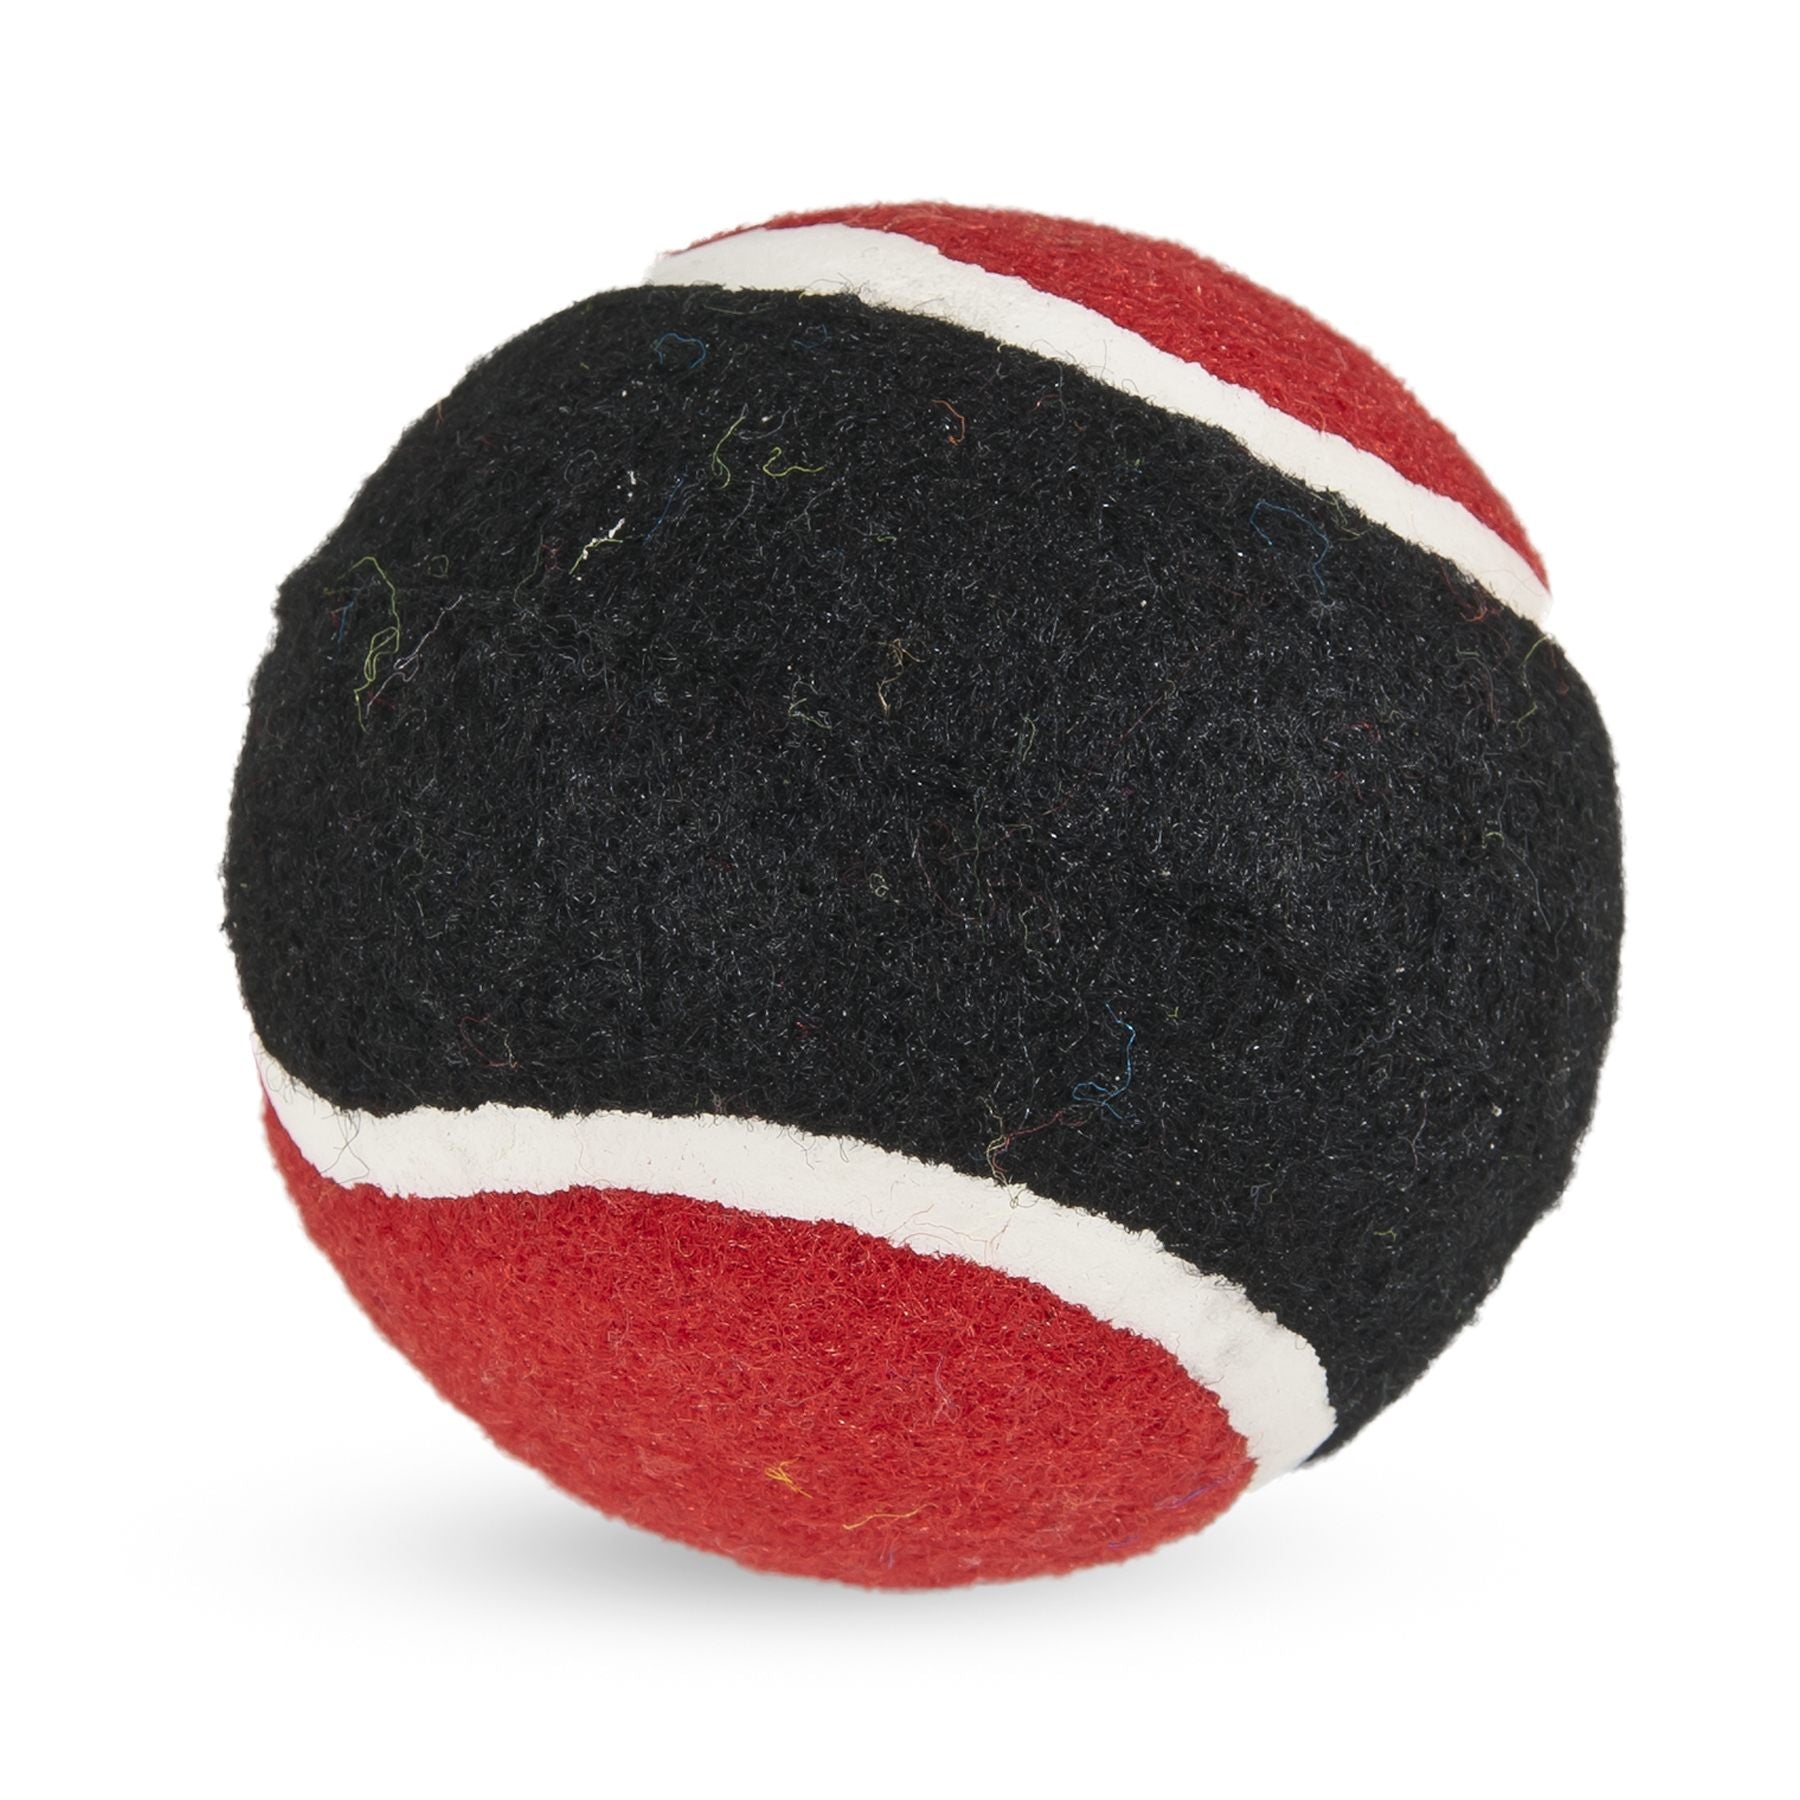 Dogzilla Tuff Tennis Ball (4 Pack)